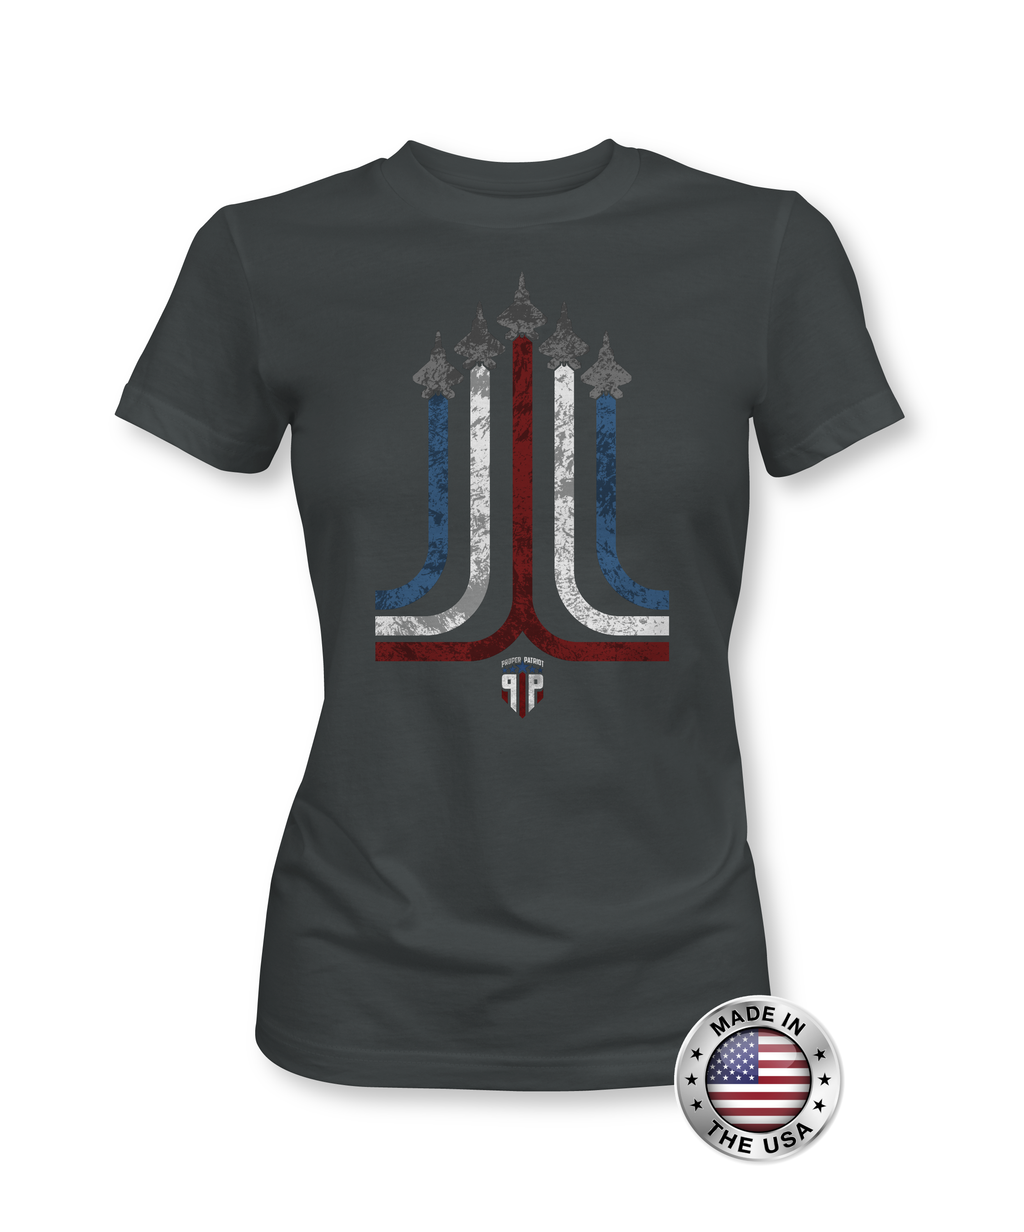 Jet Stream - USA Shirt - Red White and Blue - Women's Patriotic Shirts - Proper Patriot